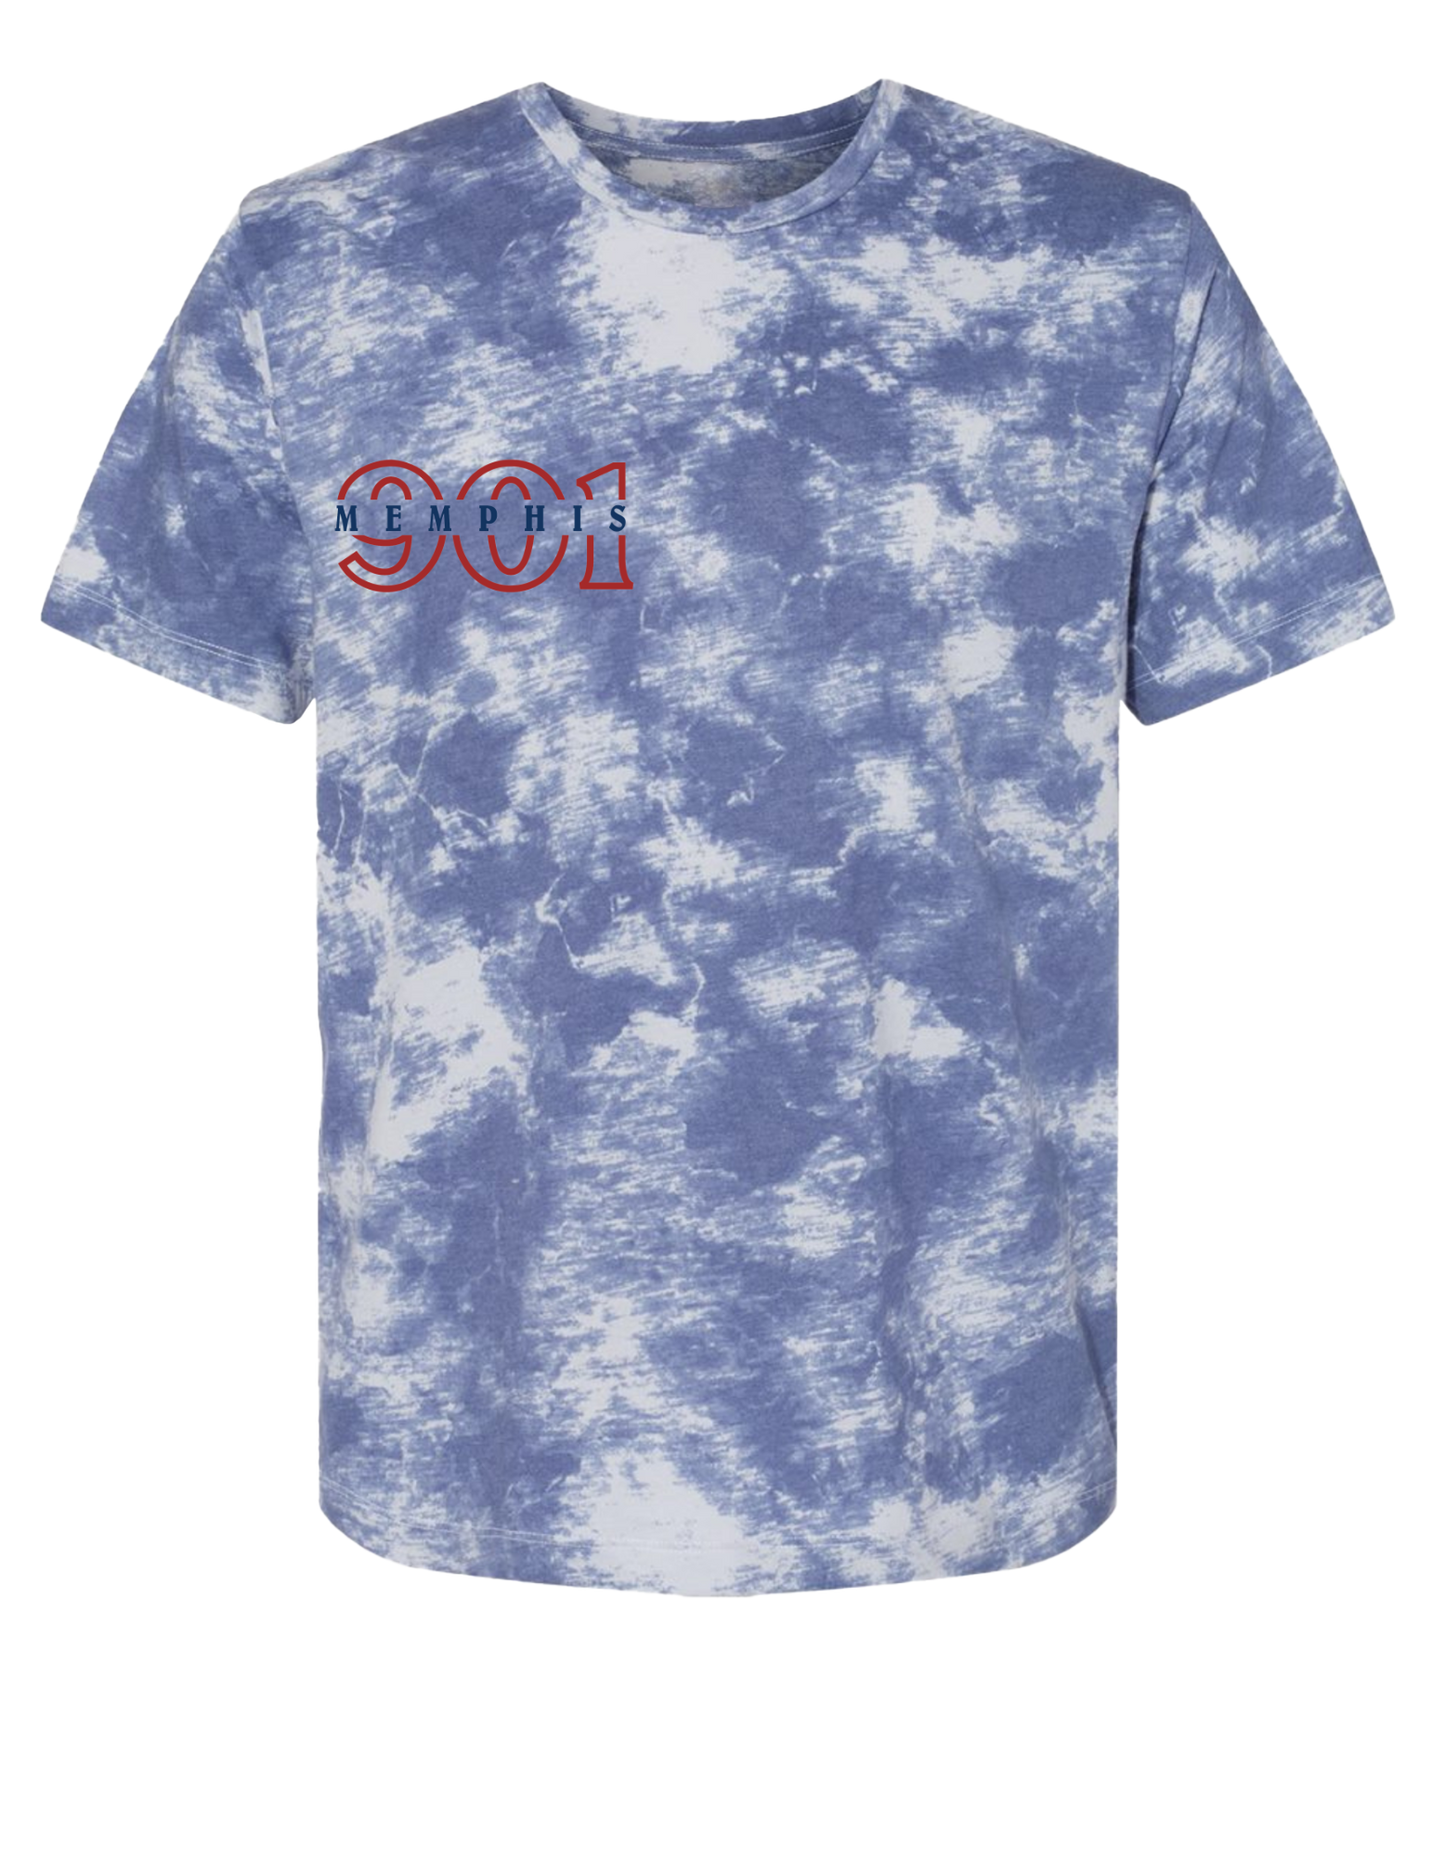 The 901 T-Shirt - Blue Tie Dye